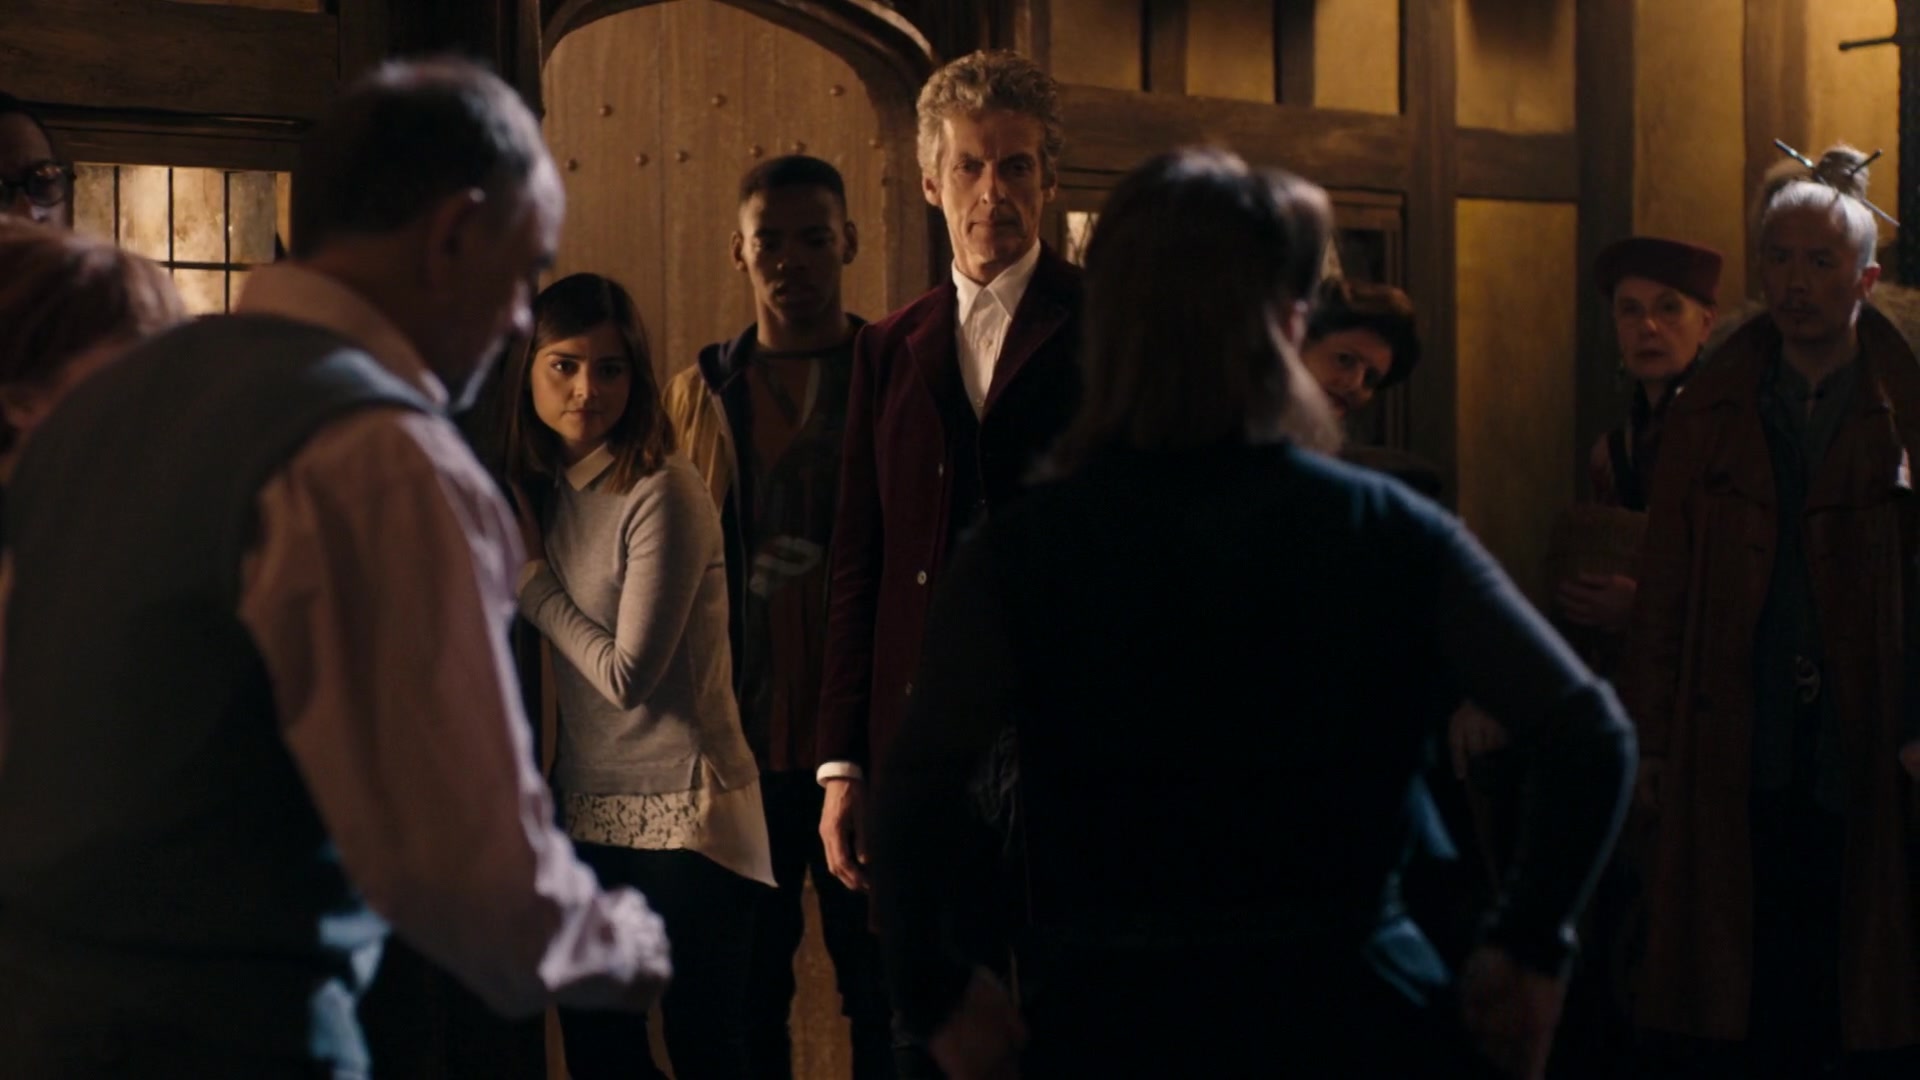 Doctor_Who_9x10-Sleep_No_More_0461.jpg